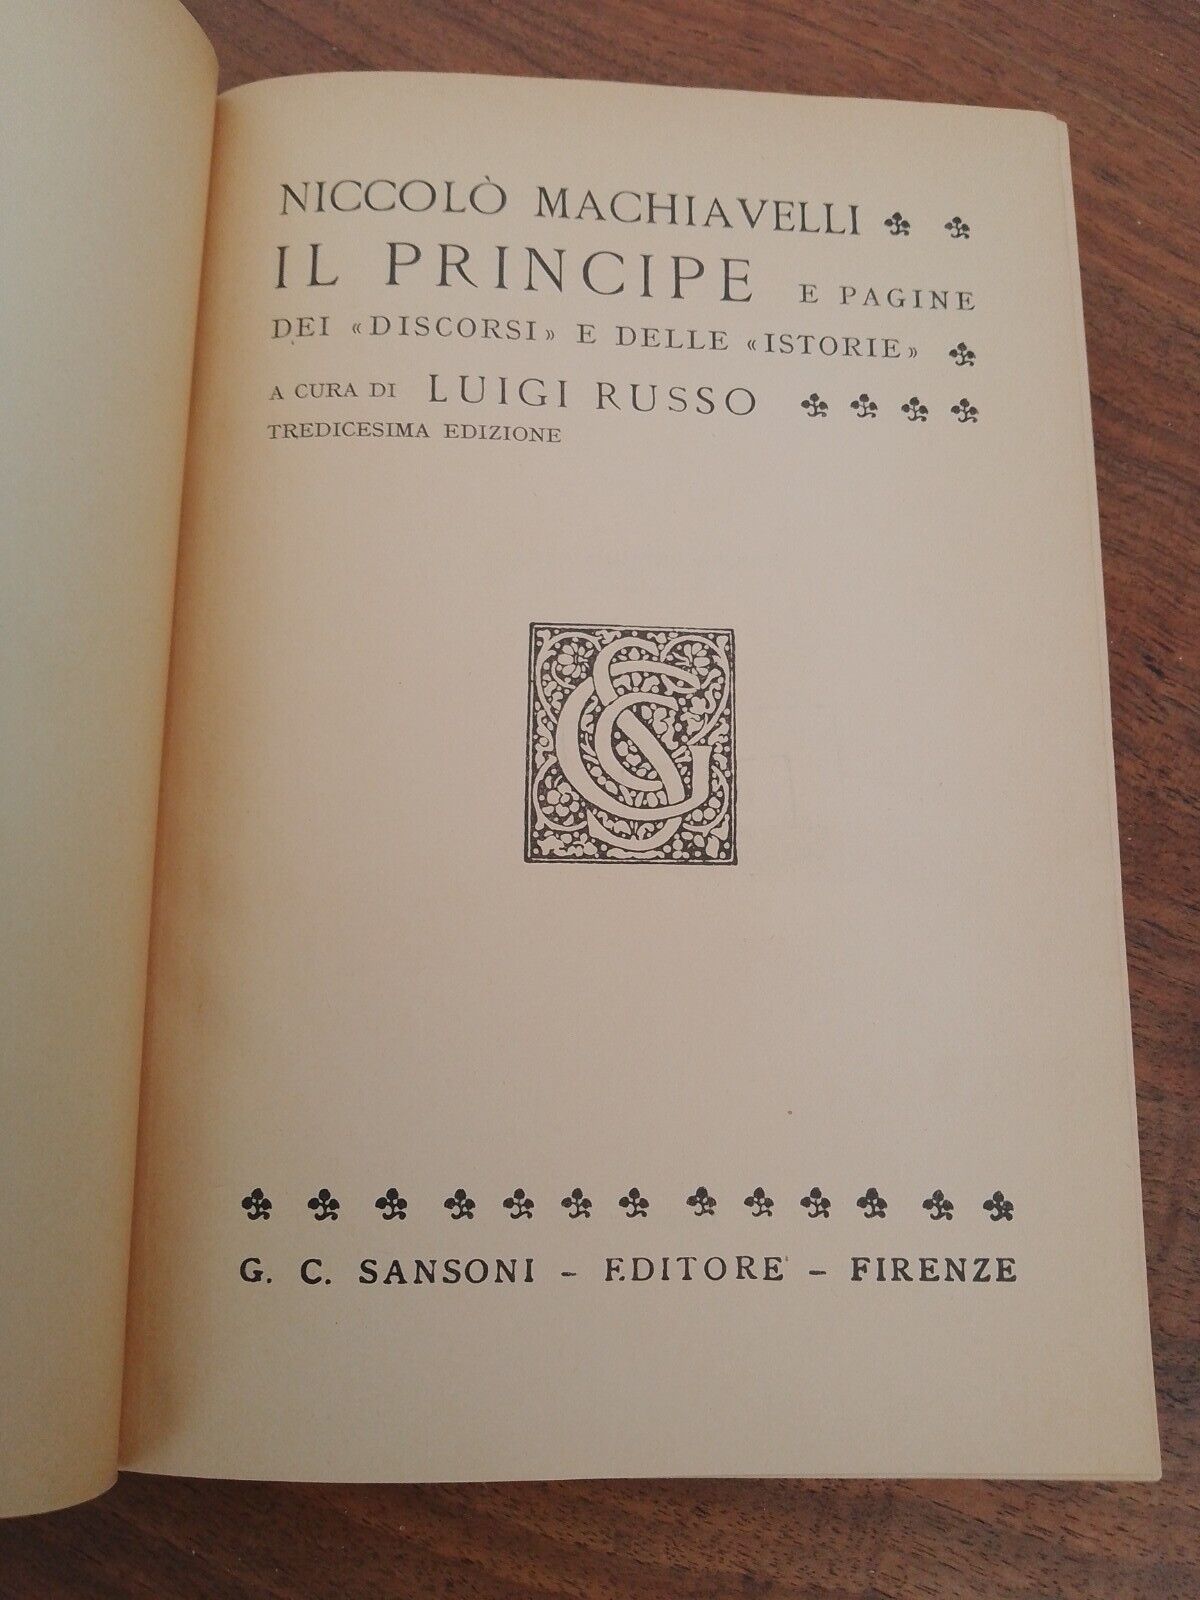 Il Principe, N.Machiavelli, Sansoni 1967